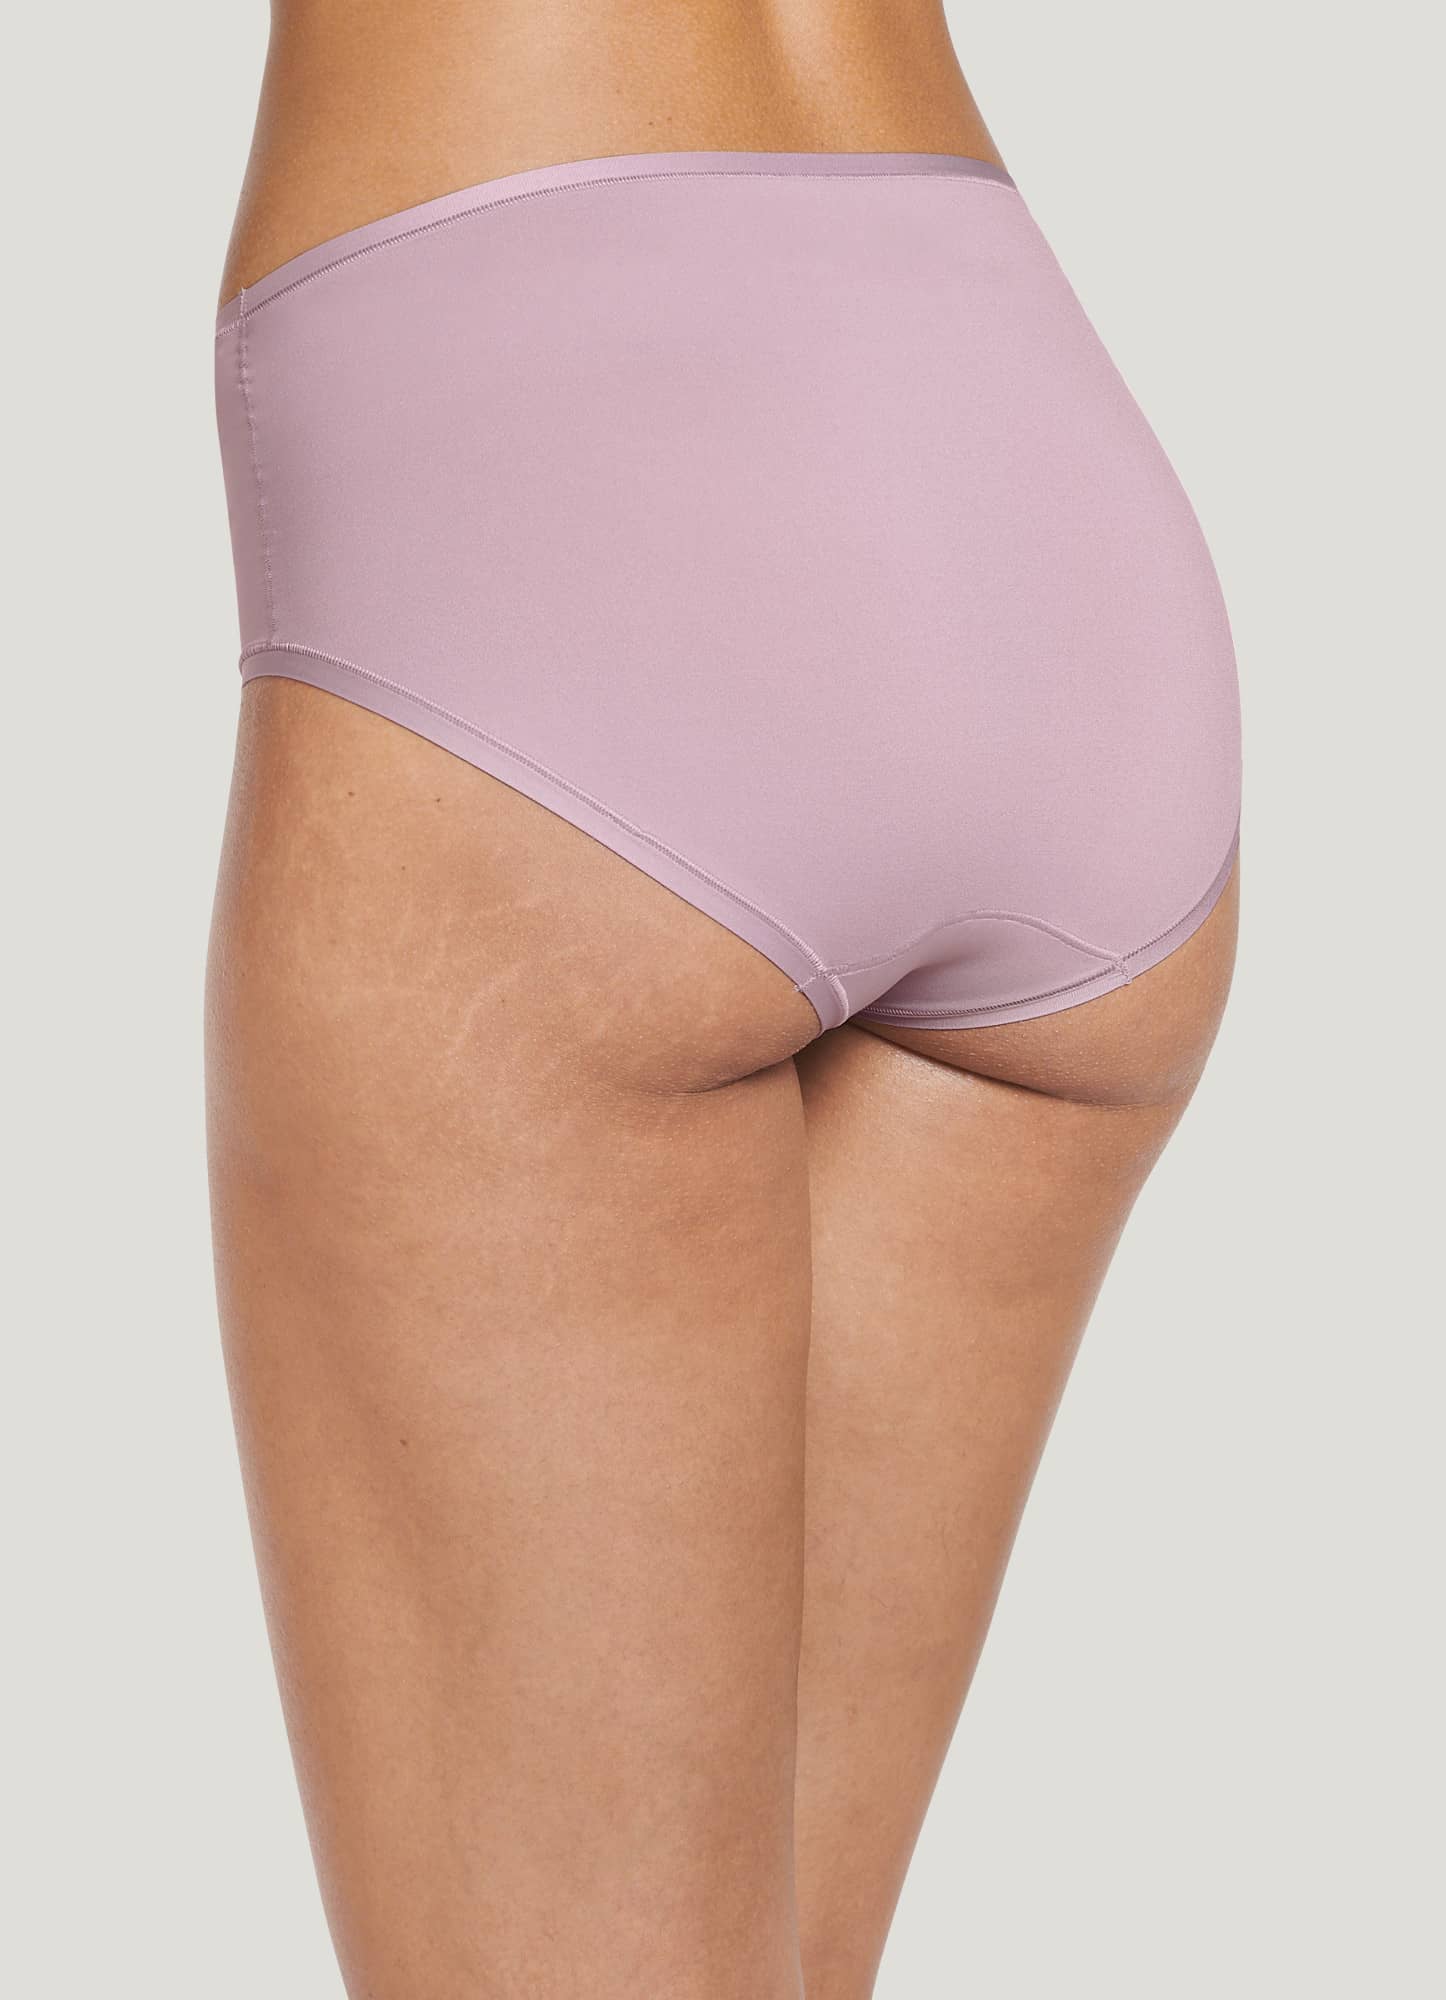 216 Pairs Ladies Nylon Panty - Womens Panties & Underwear - at 